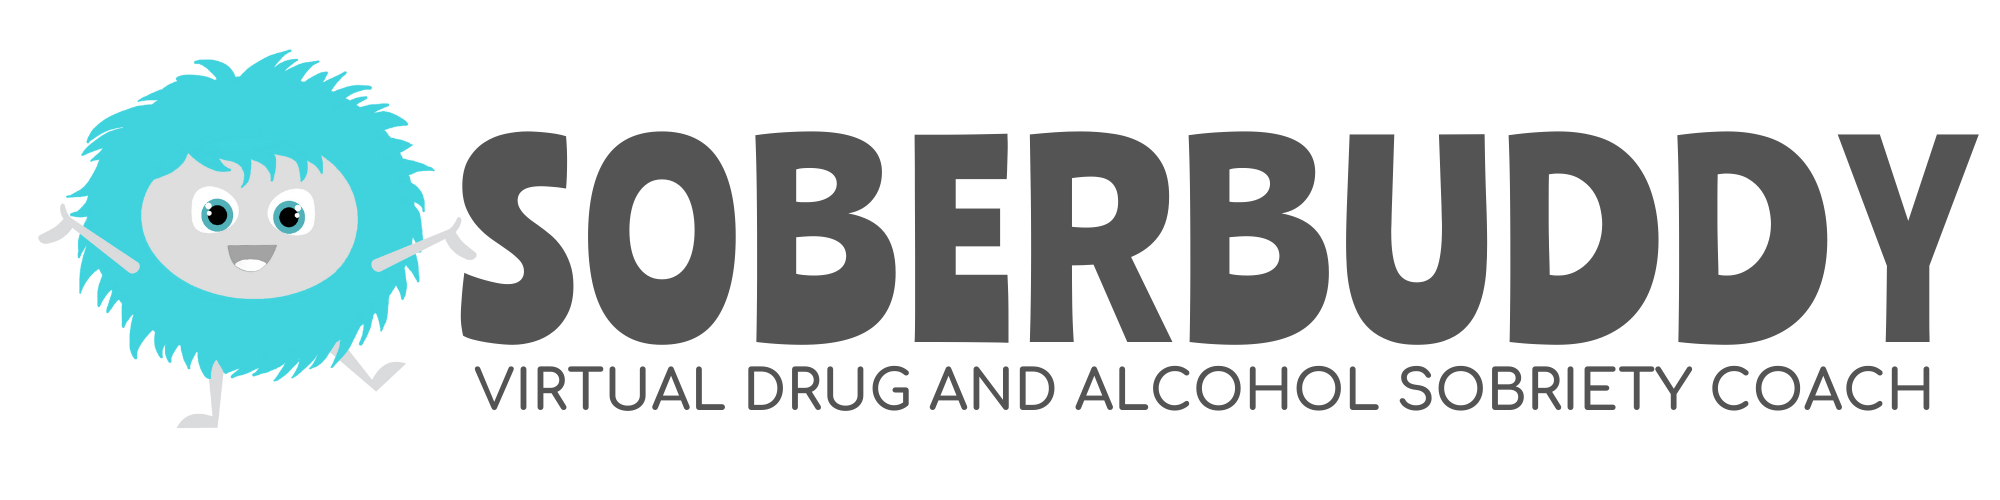 SoberBuddy Logo light background (1) (1).png